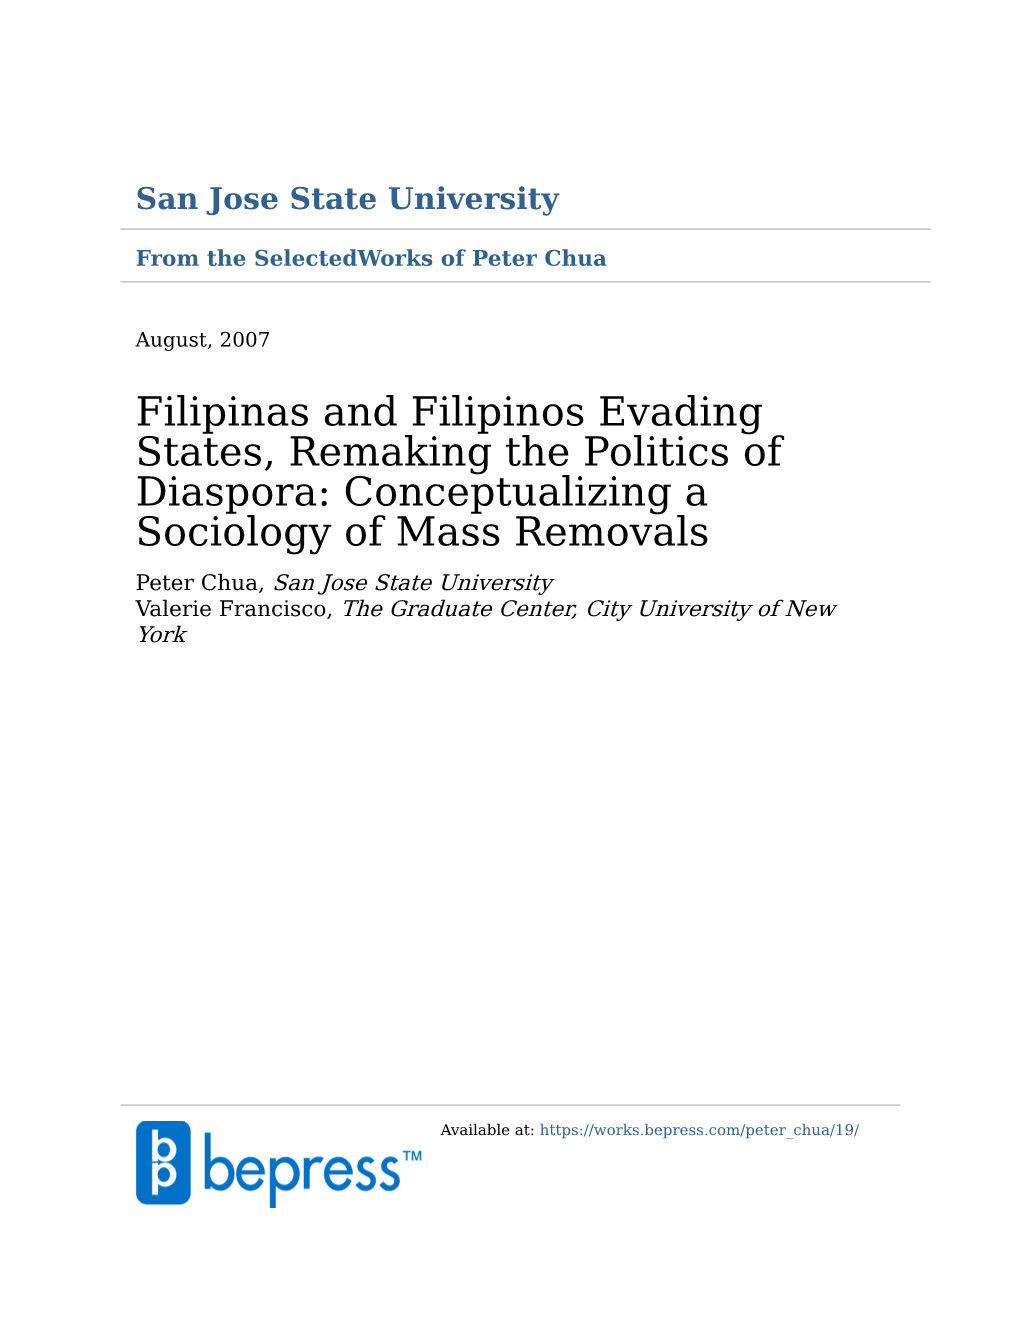 Filipinas and Filipinos Evading States, Remaking the Politics Of